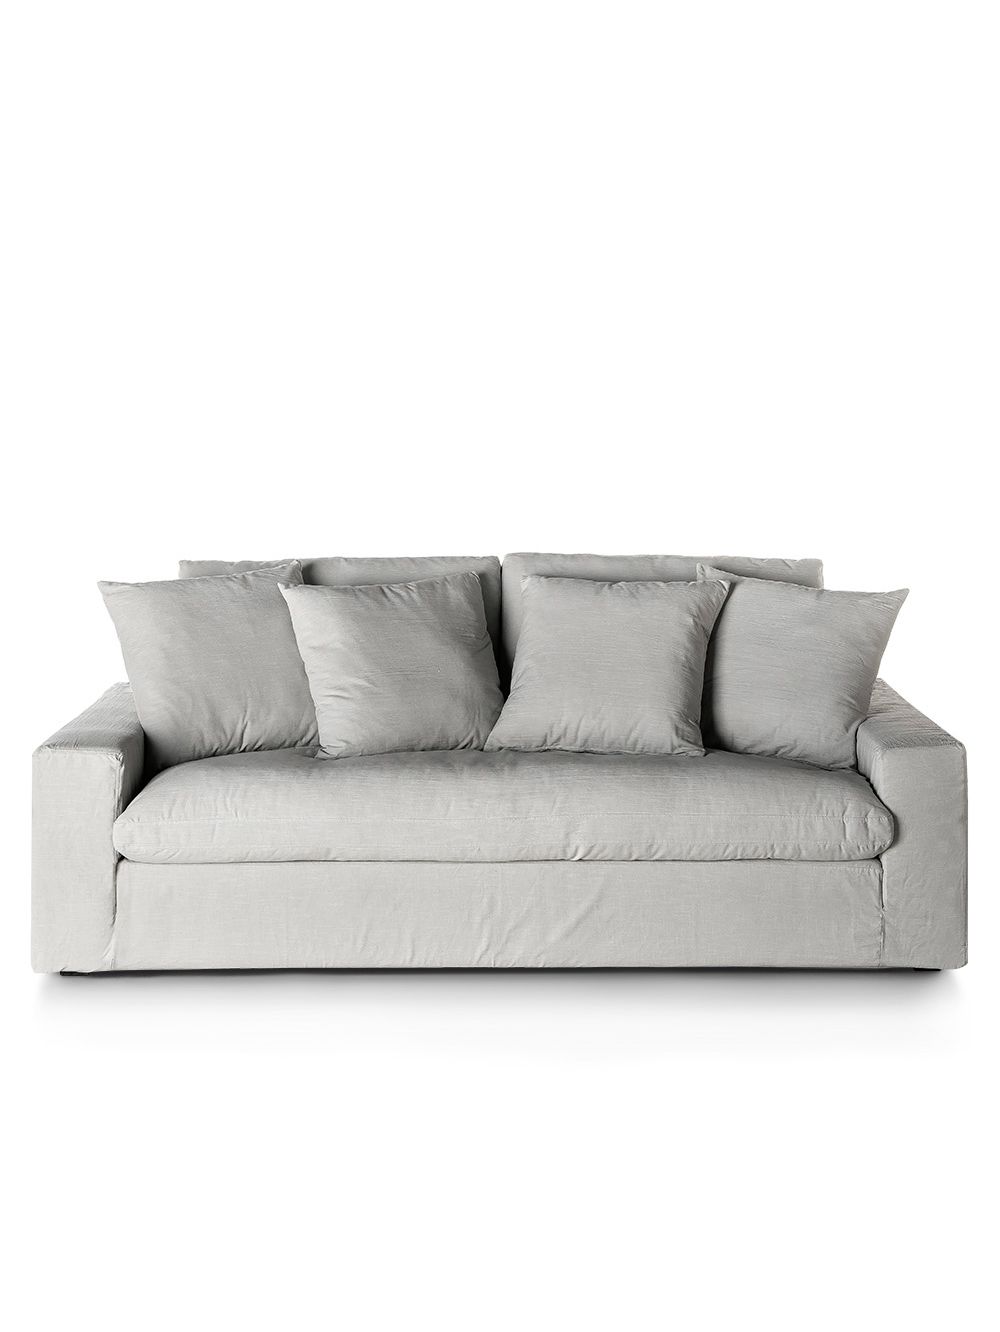 Sofa-grande-de-lino-gris-claro-HONOLULU-LIGHT-GREY-231-Landmark-01